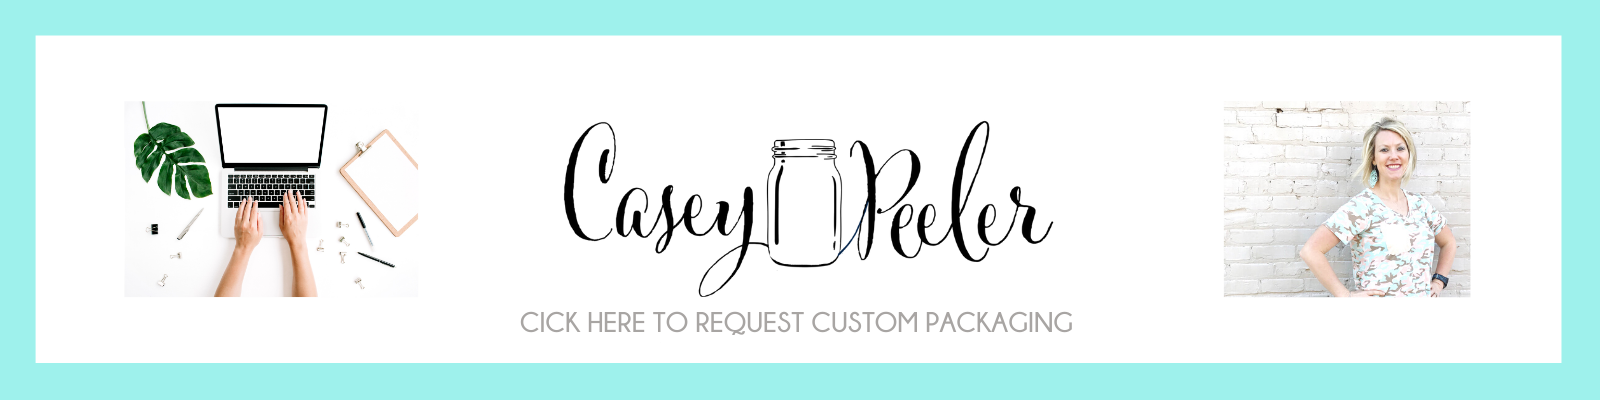 Custom packaging option from Casey Peeler writing accountability